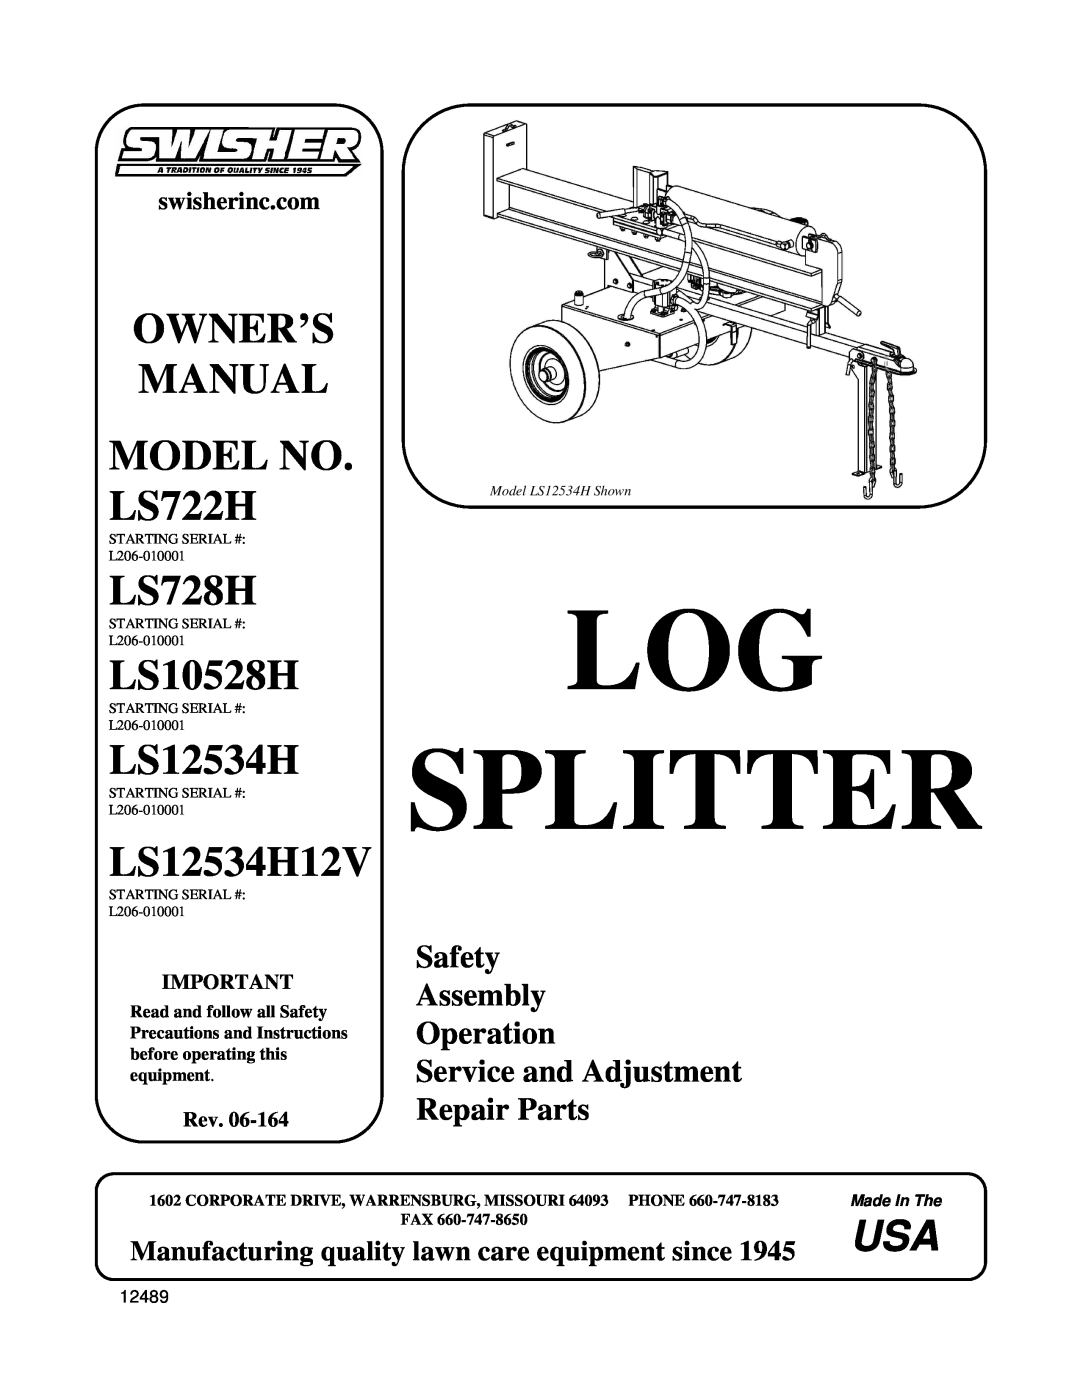 Swisher manual LS728H, LS10528H, LS12534H12V, MODELNO. LS722H, Rev.06-164, Log Splitter, RepairParts 